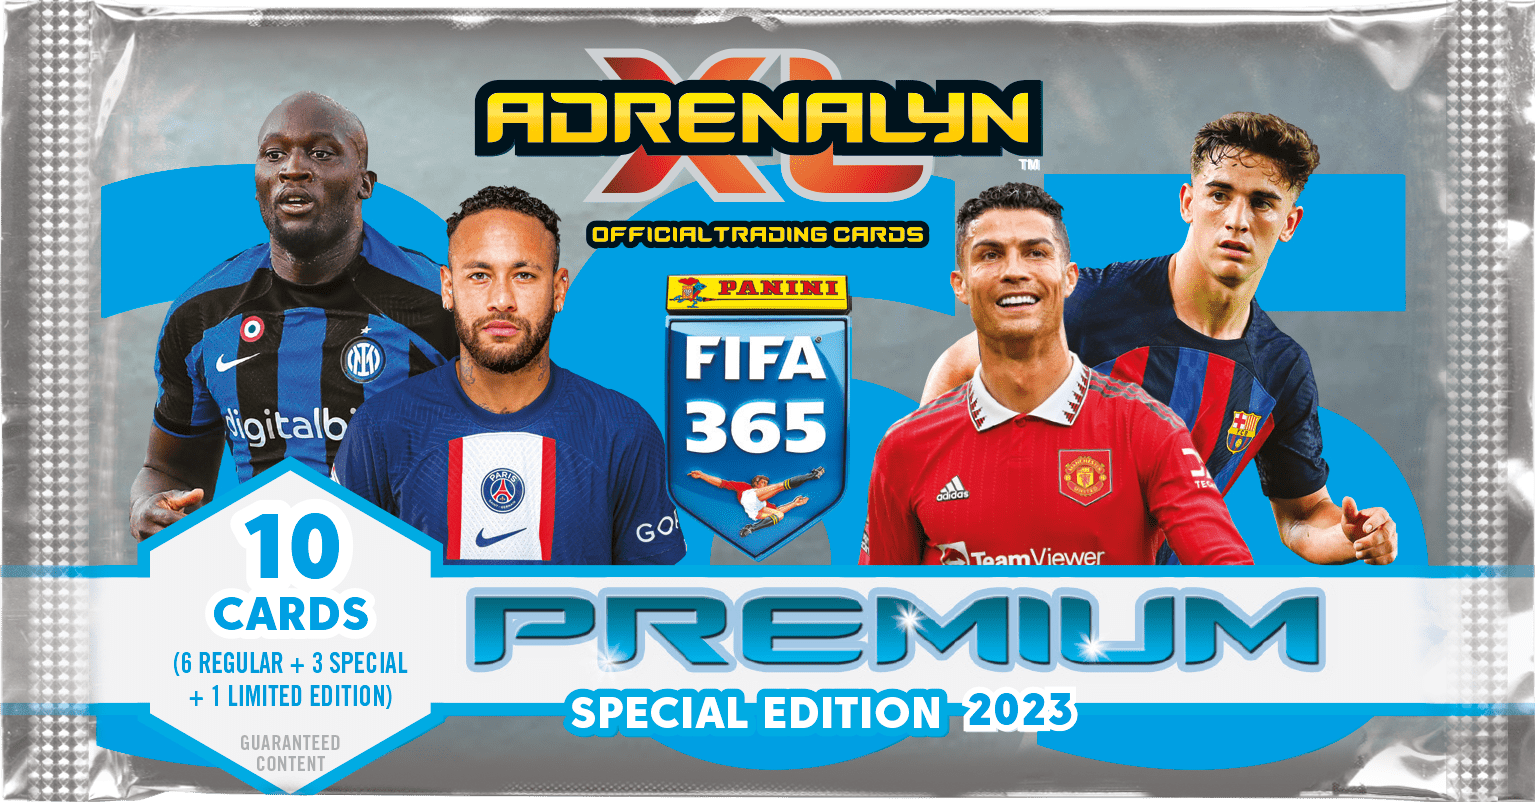 Adrenalyn Liga 2023 Panini trading cards 